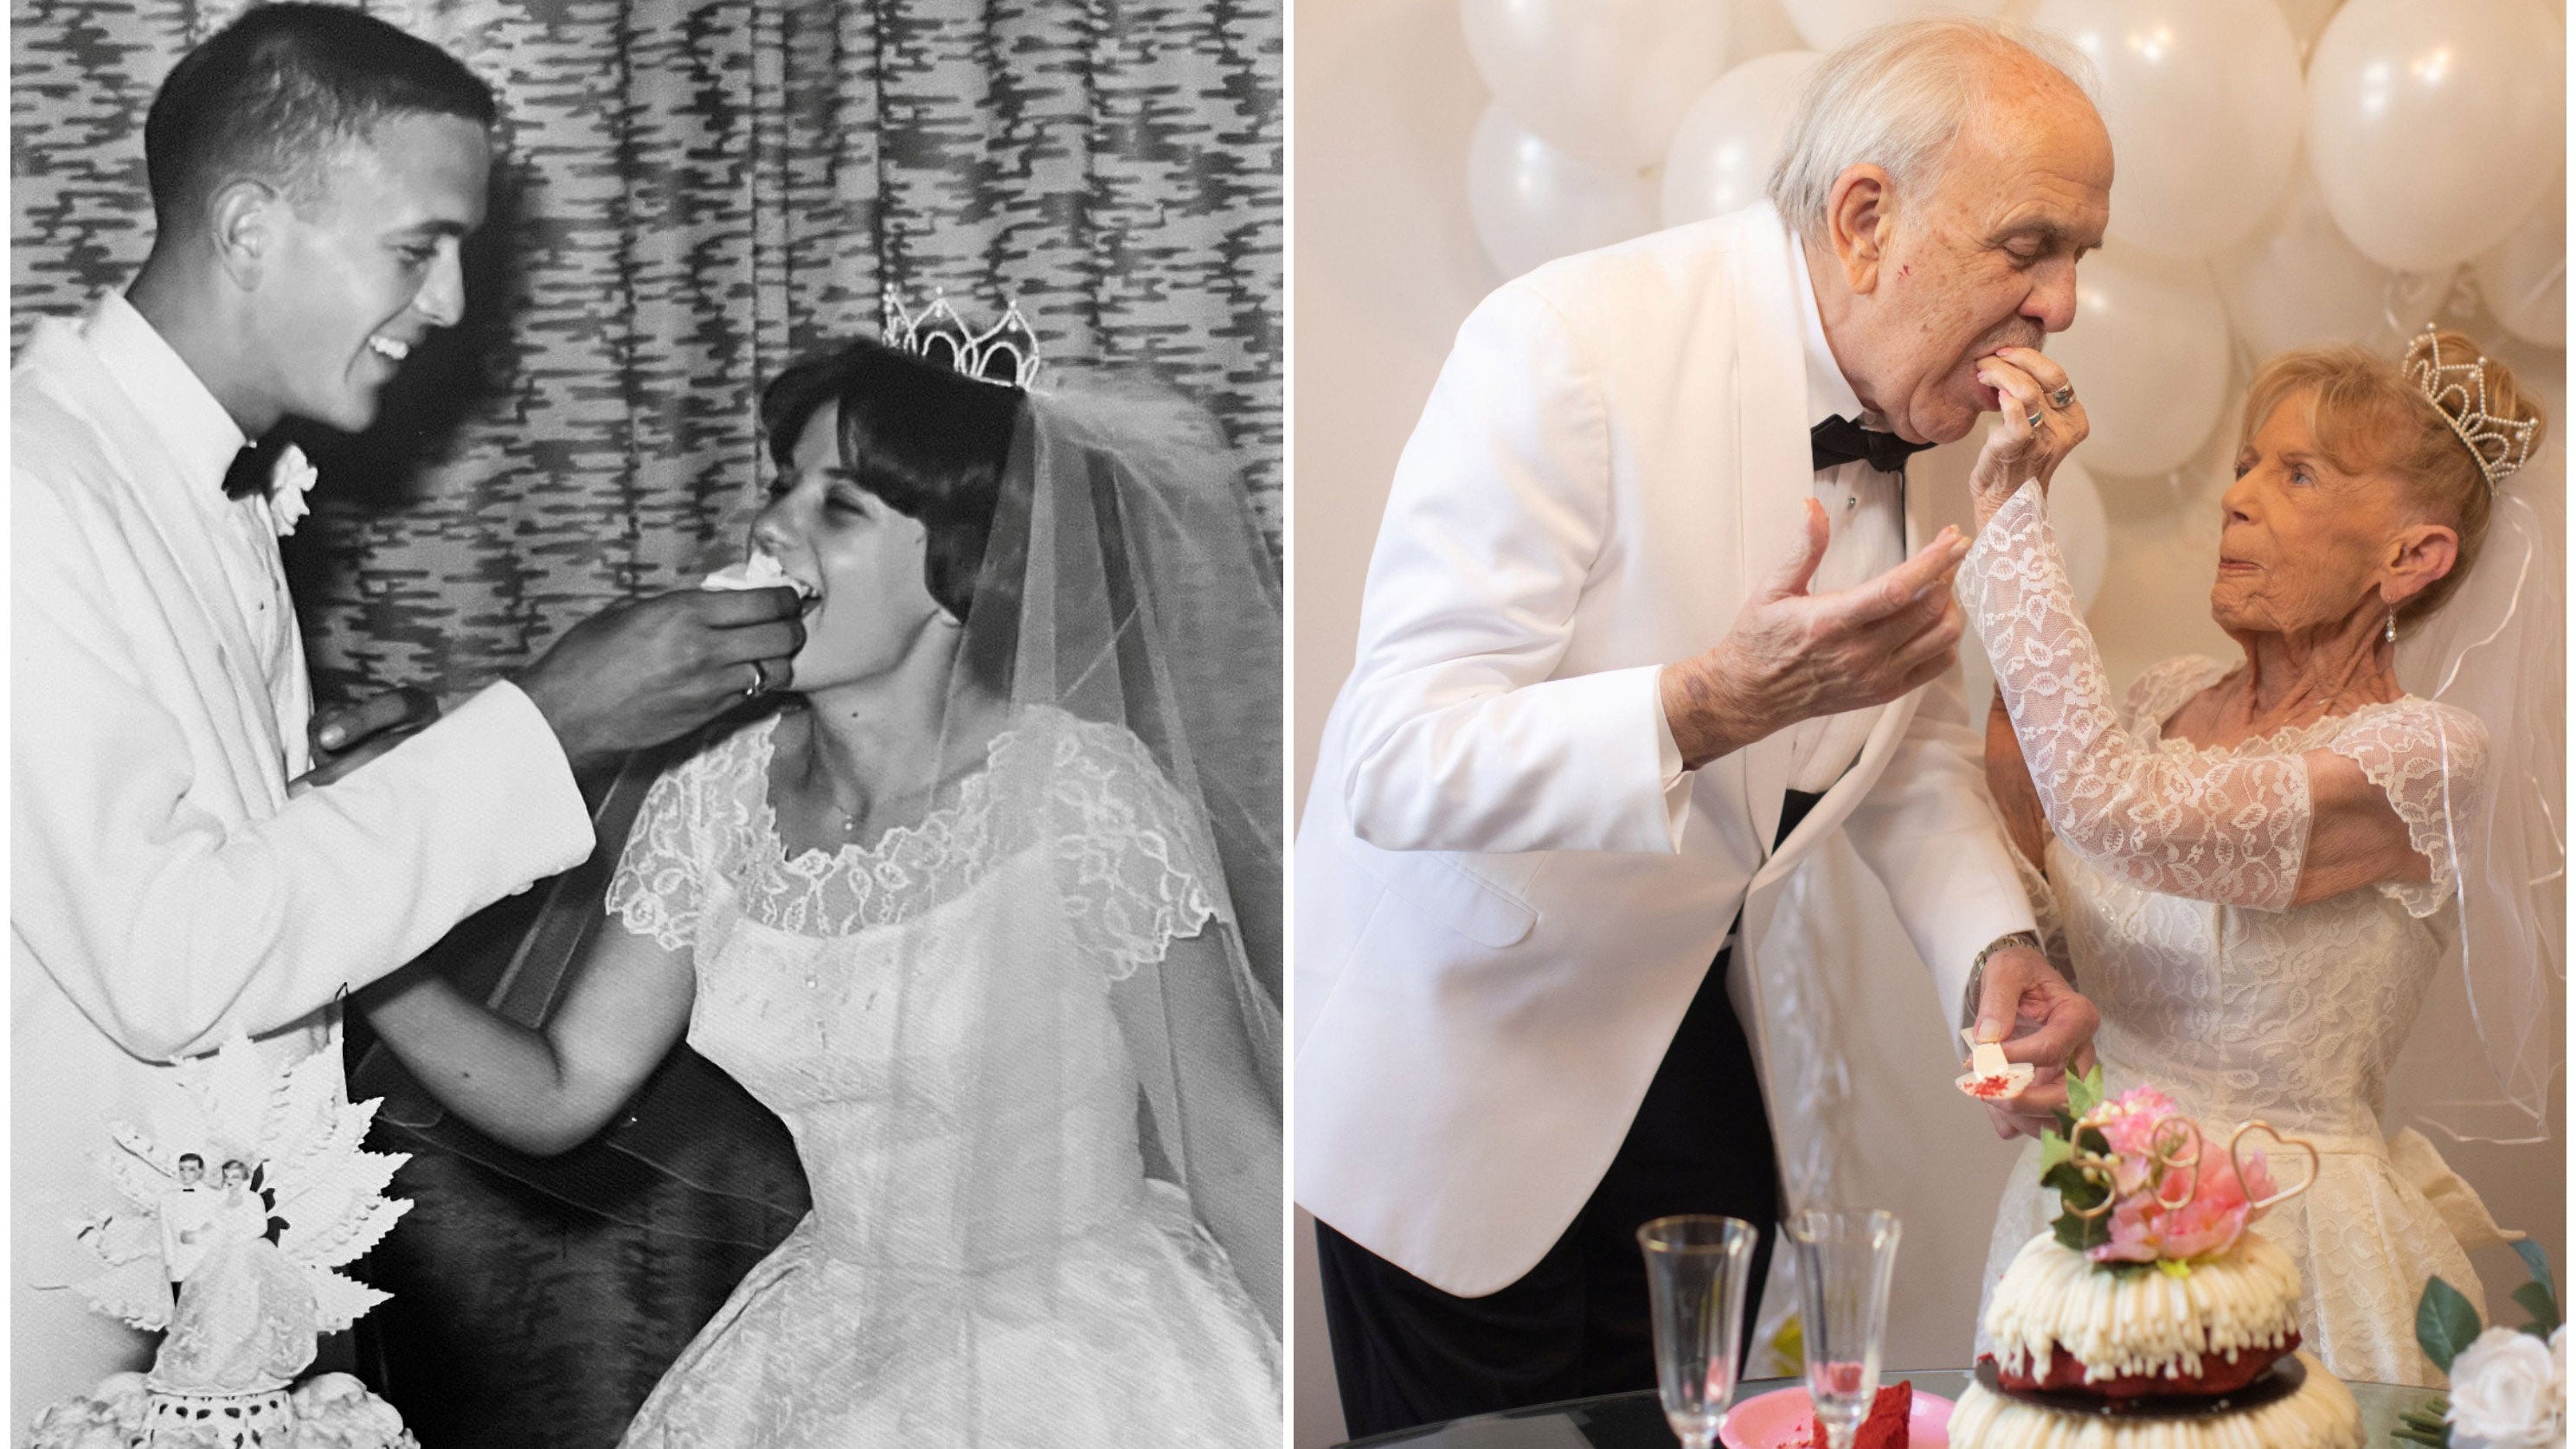 Woman wears original wedding dress for 59th anniversary photo shoot: ‘It fit like a glove’